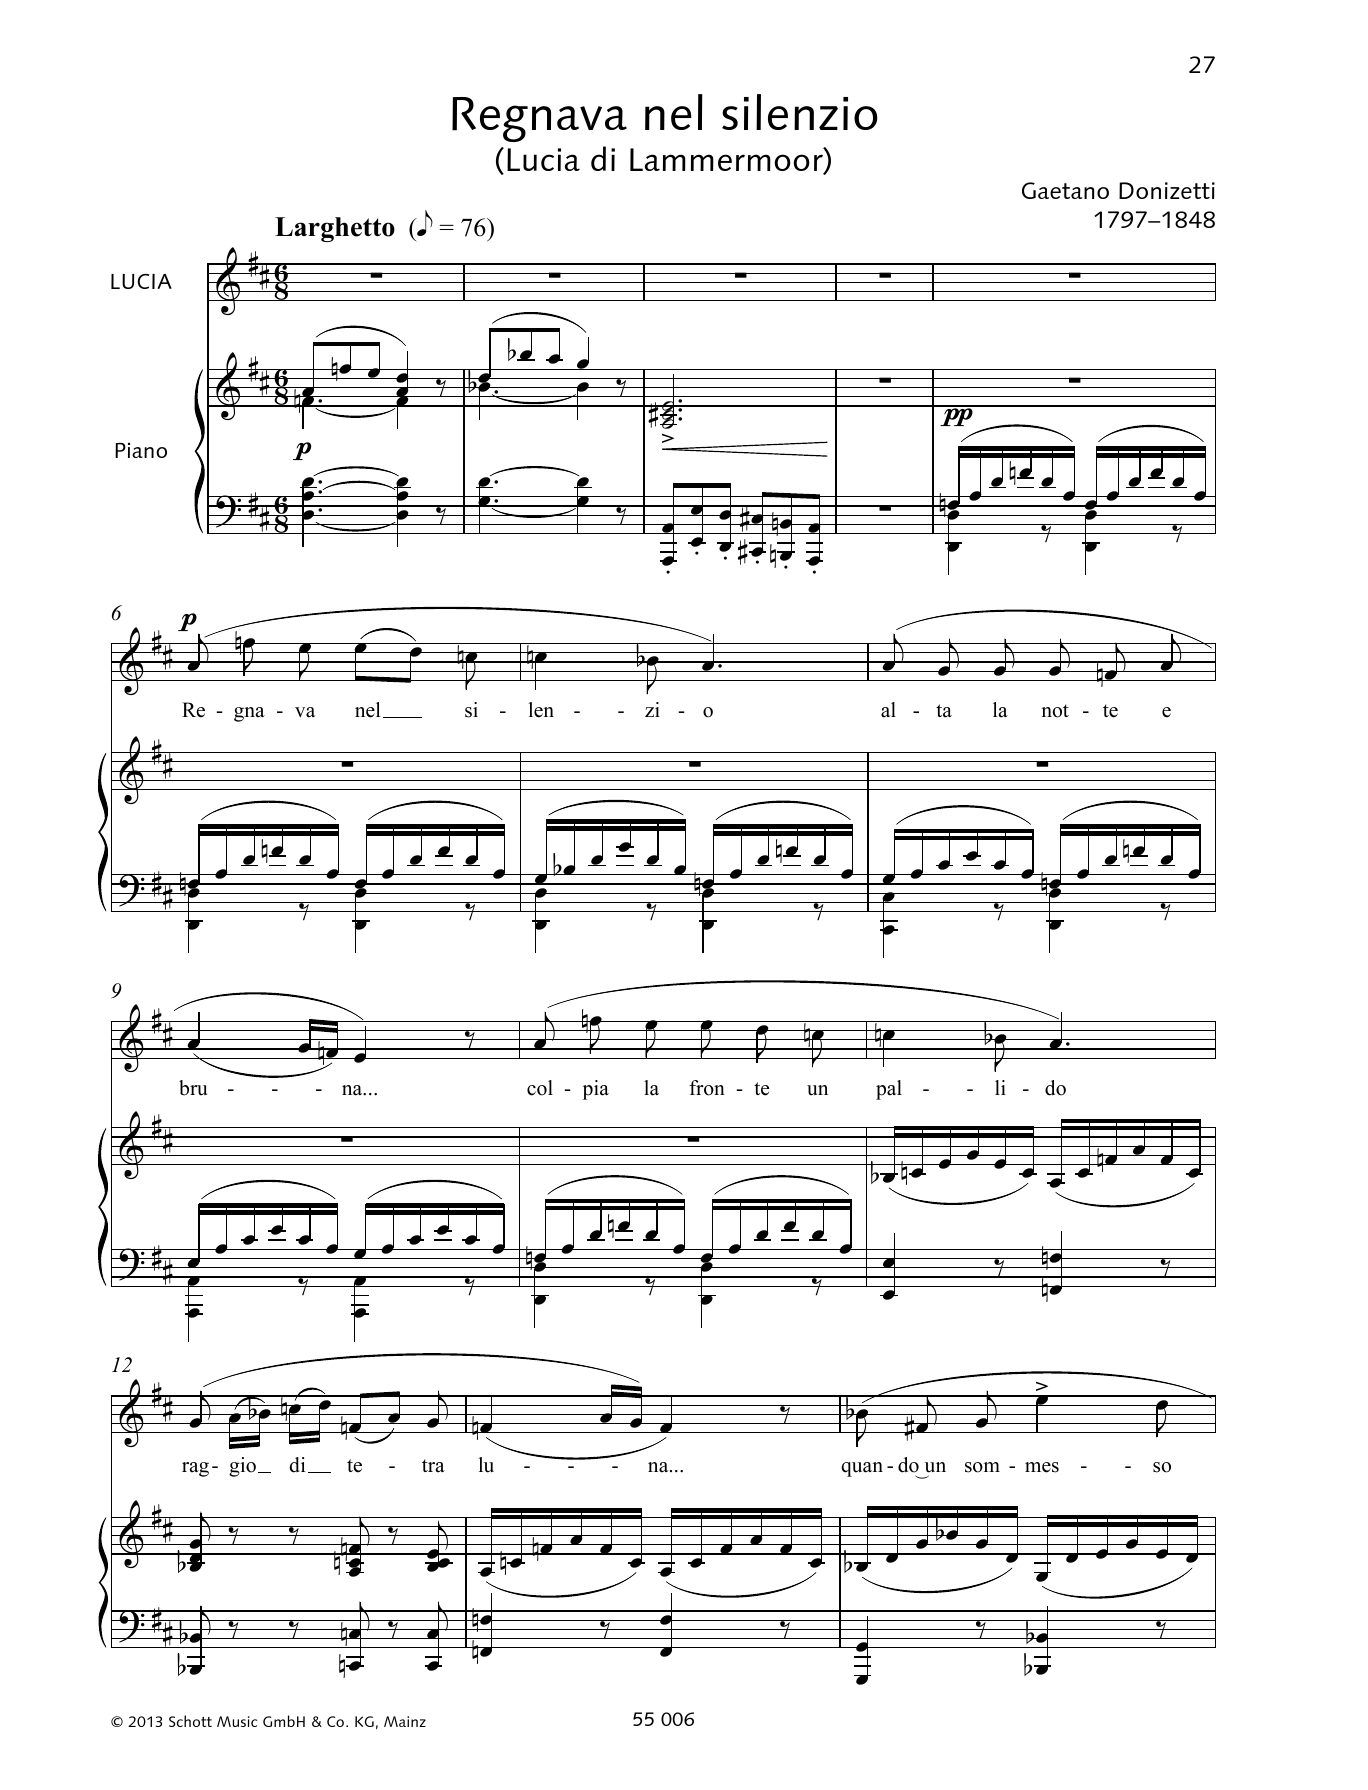 Gaetano Donizetti Regnava nel silenzio Sheet Music Notes & Chords for Piano & Vocal - Download or Print PDF